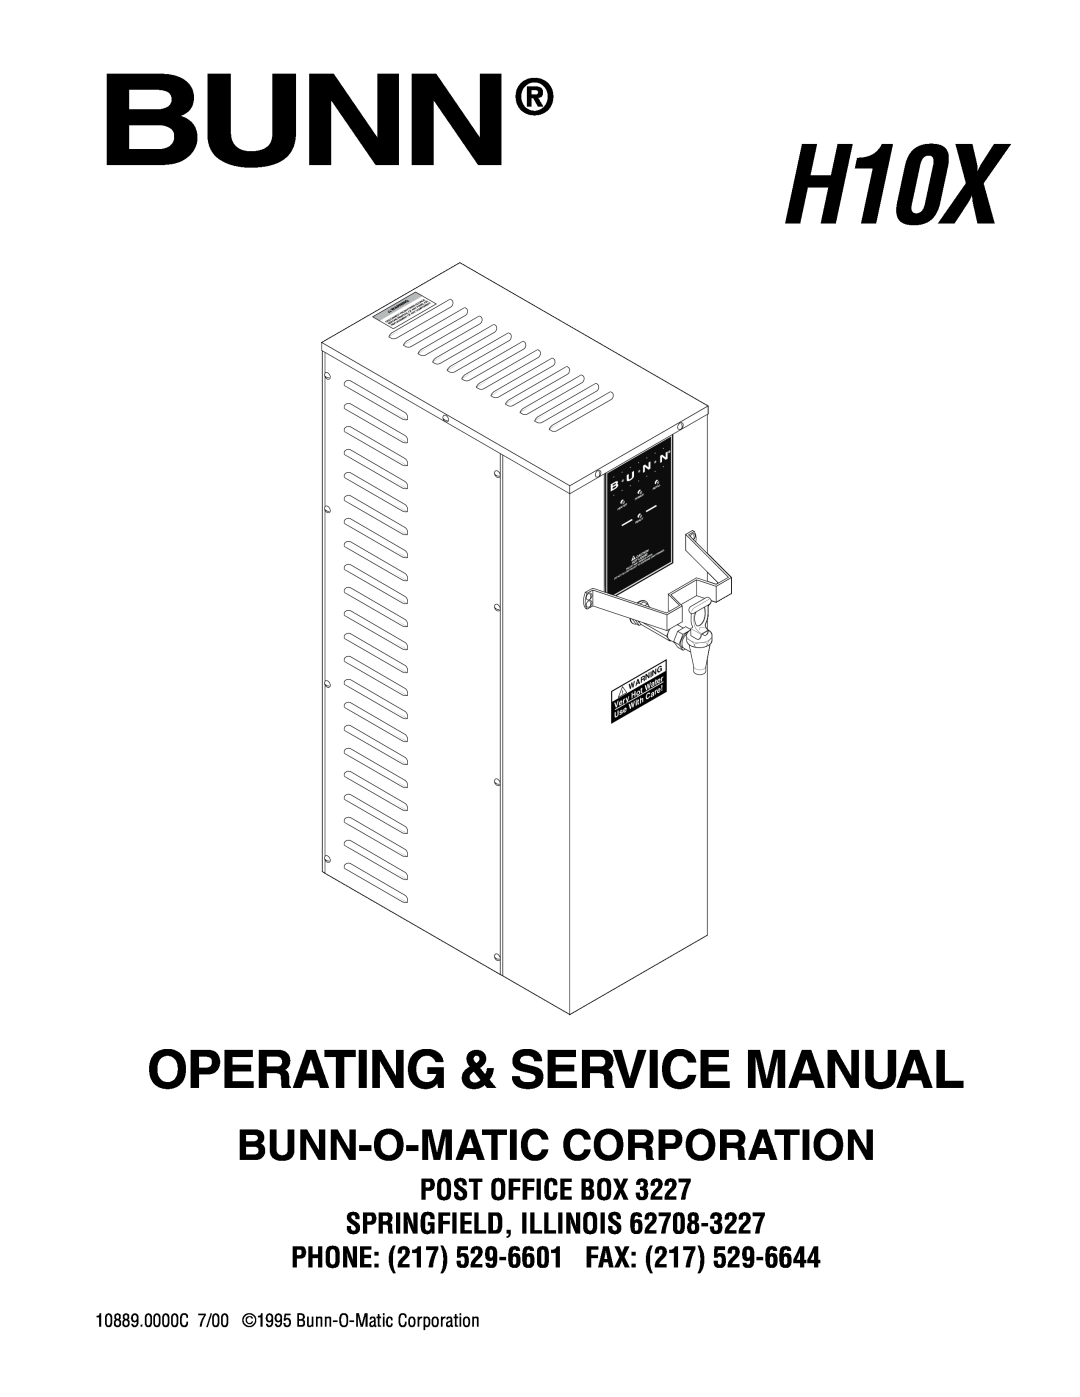 Bunn H10X manual Bunn-O-Matic Corporation, POST OFFICE BOX SPRINGFIELD, ILLINOIS PHONE 217 529-6601 FAX, VeryWith, Care 